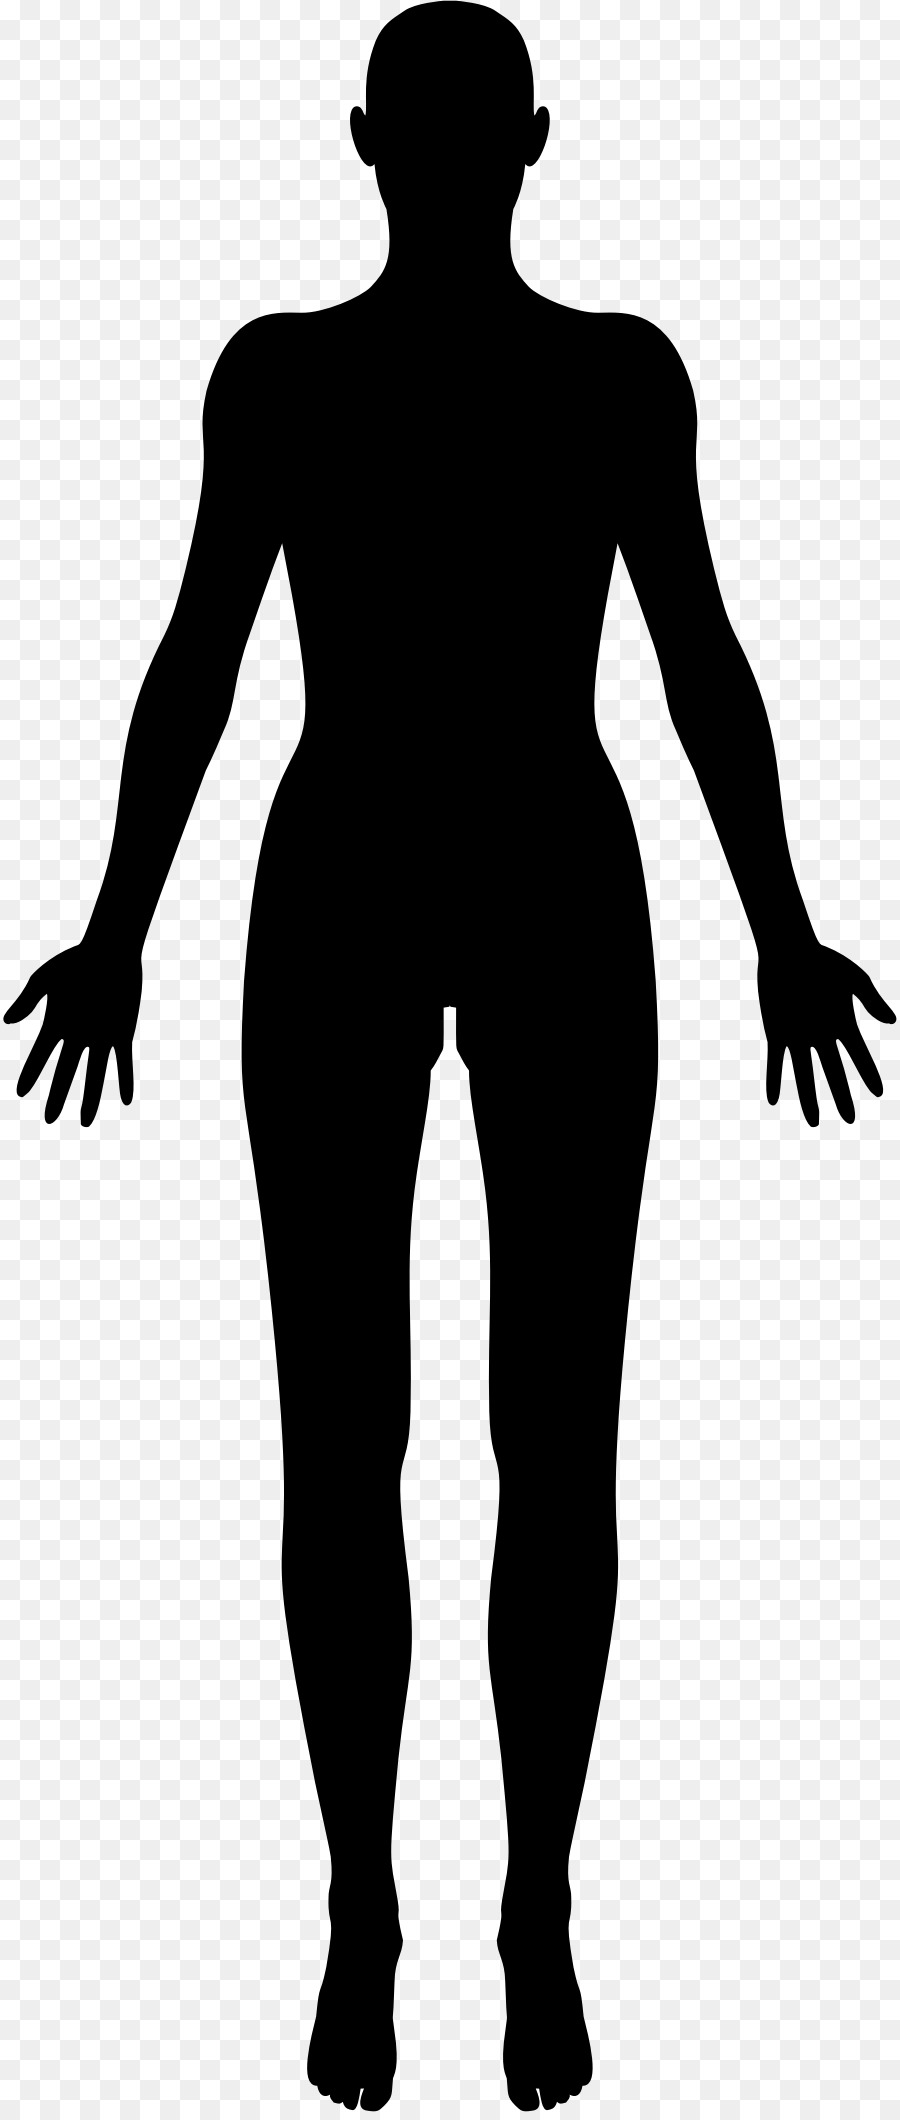 Silhouette Woman Clip art - Women Body Contour png download - 800*800